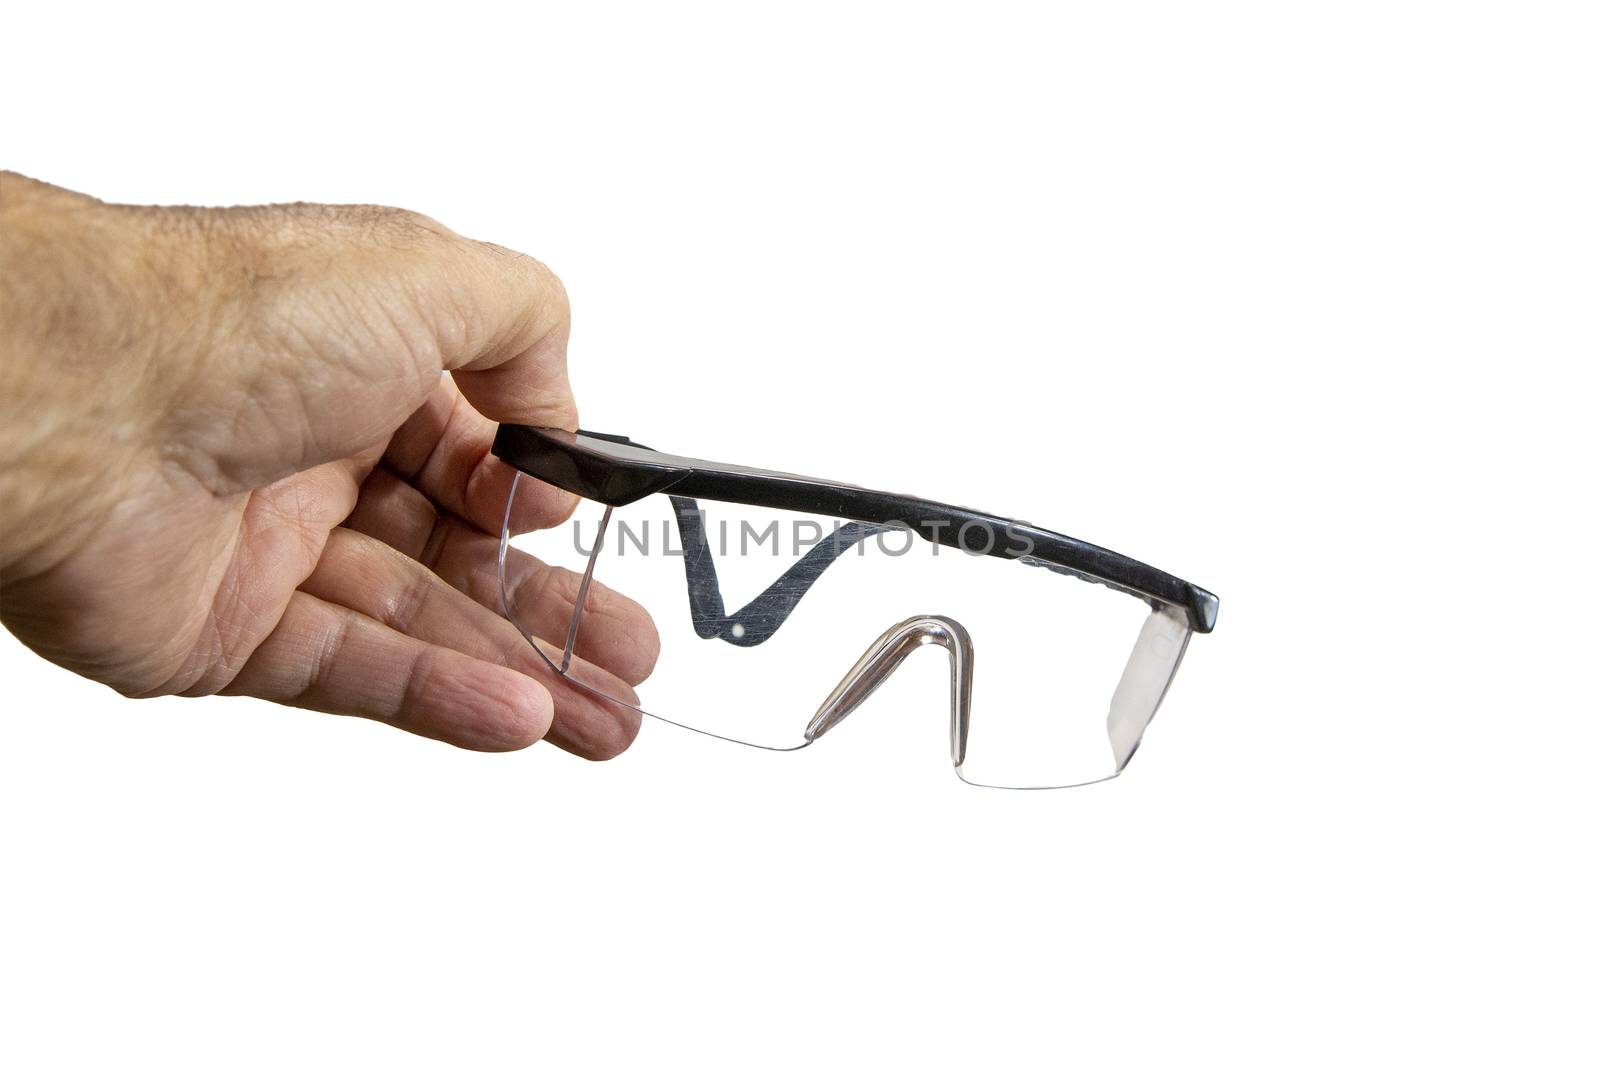 Safety glasses for work in black plastic frames against white background